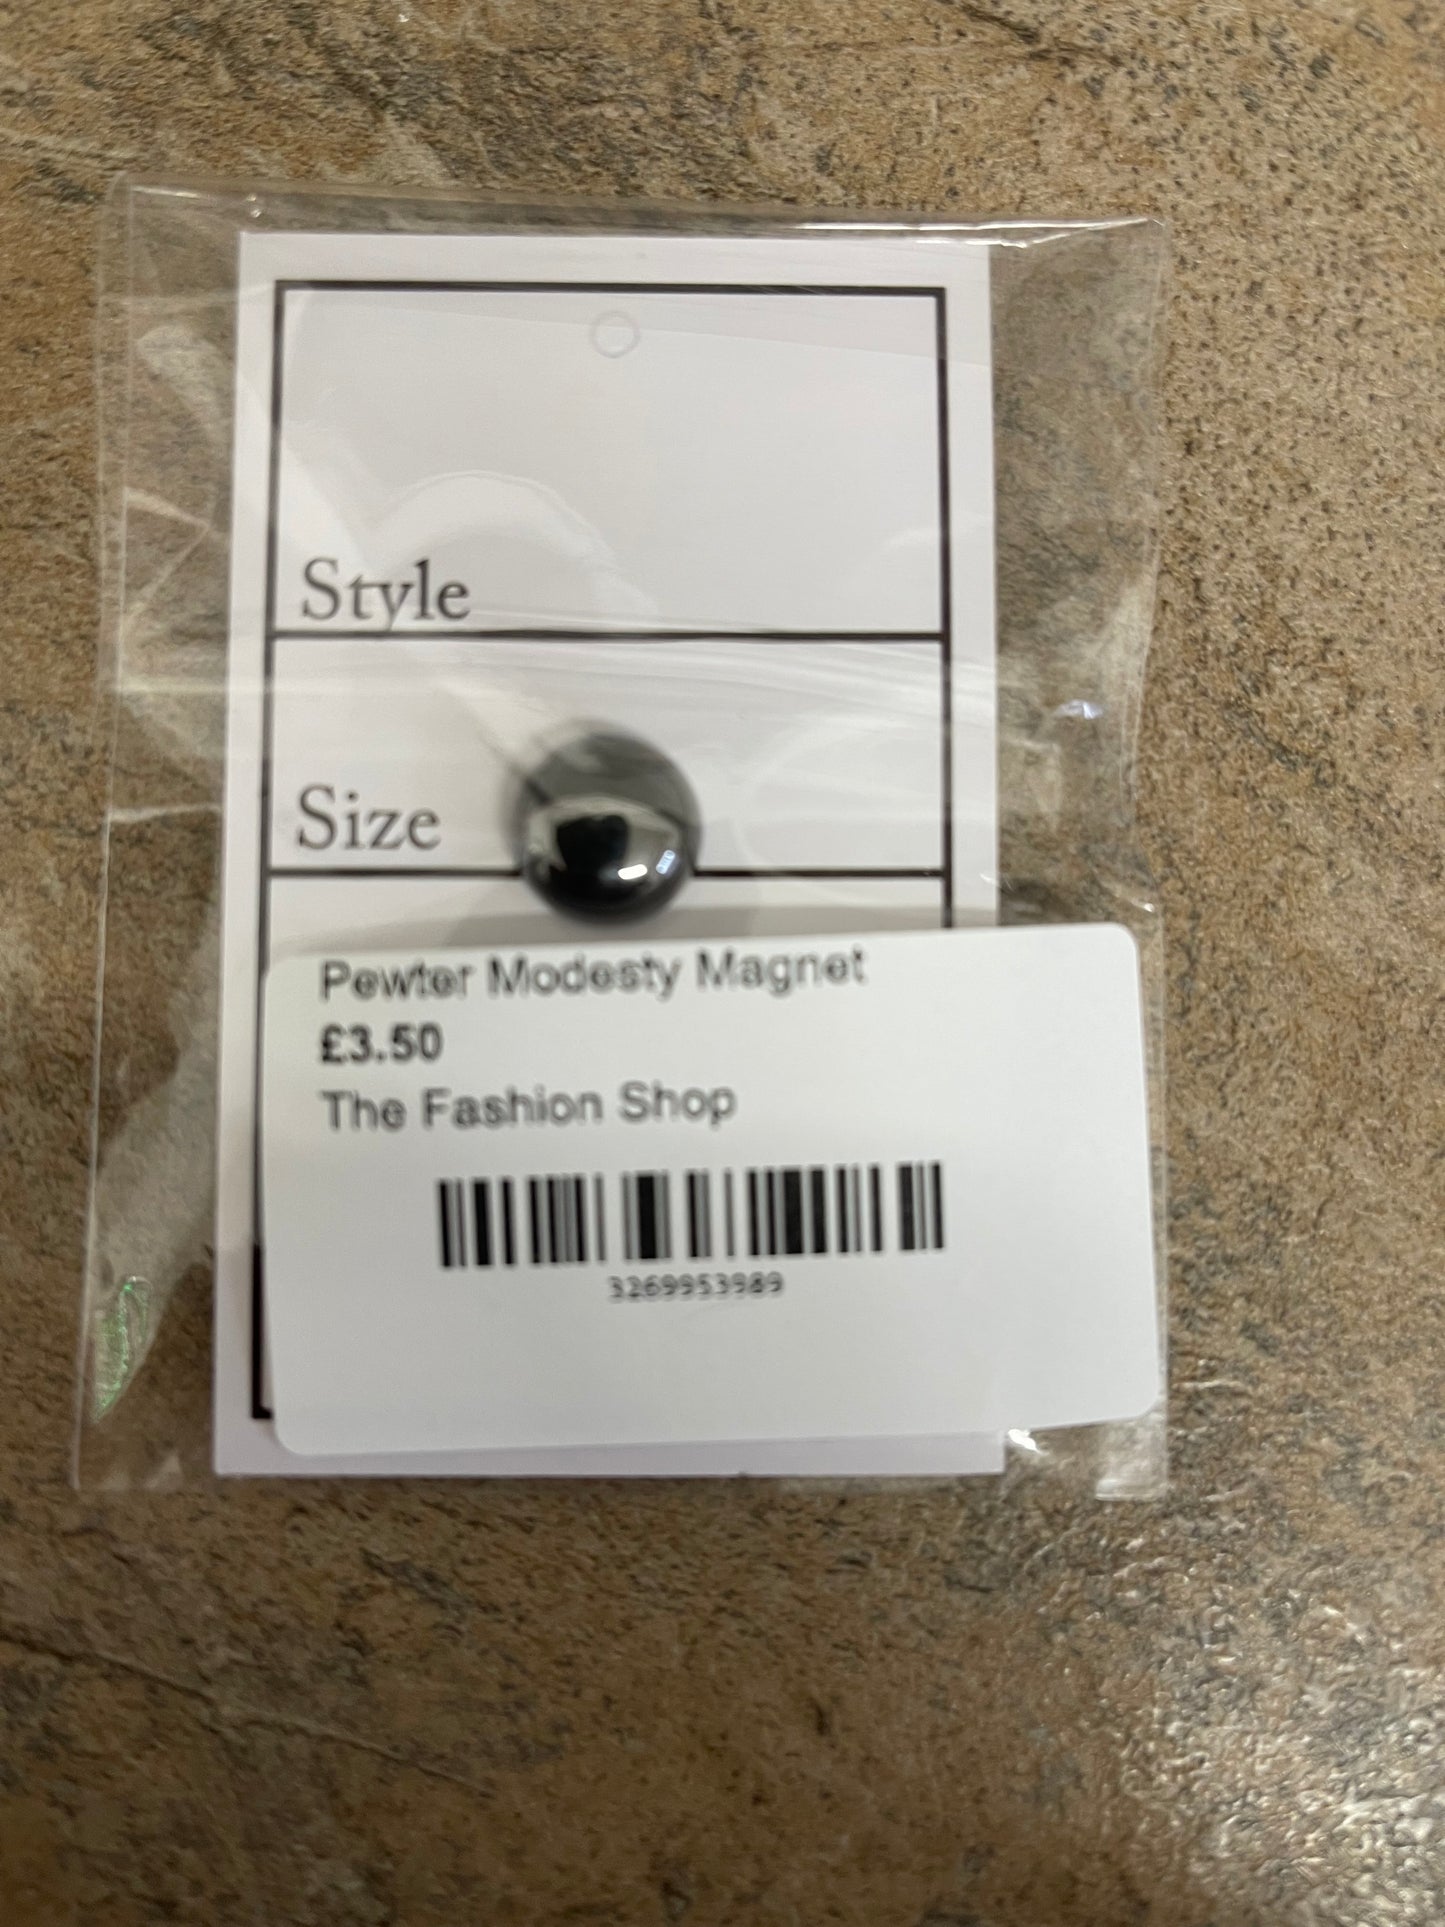 Pewter Magic Modesty Magnet